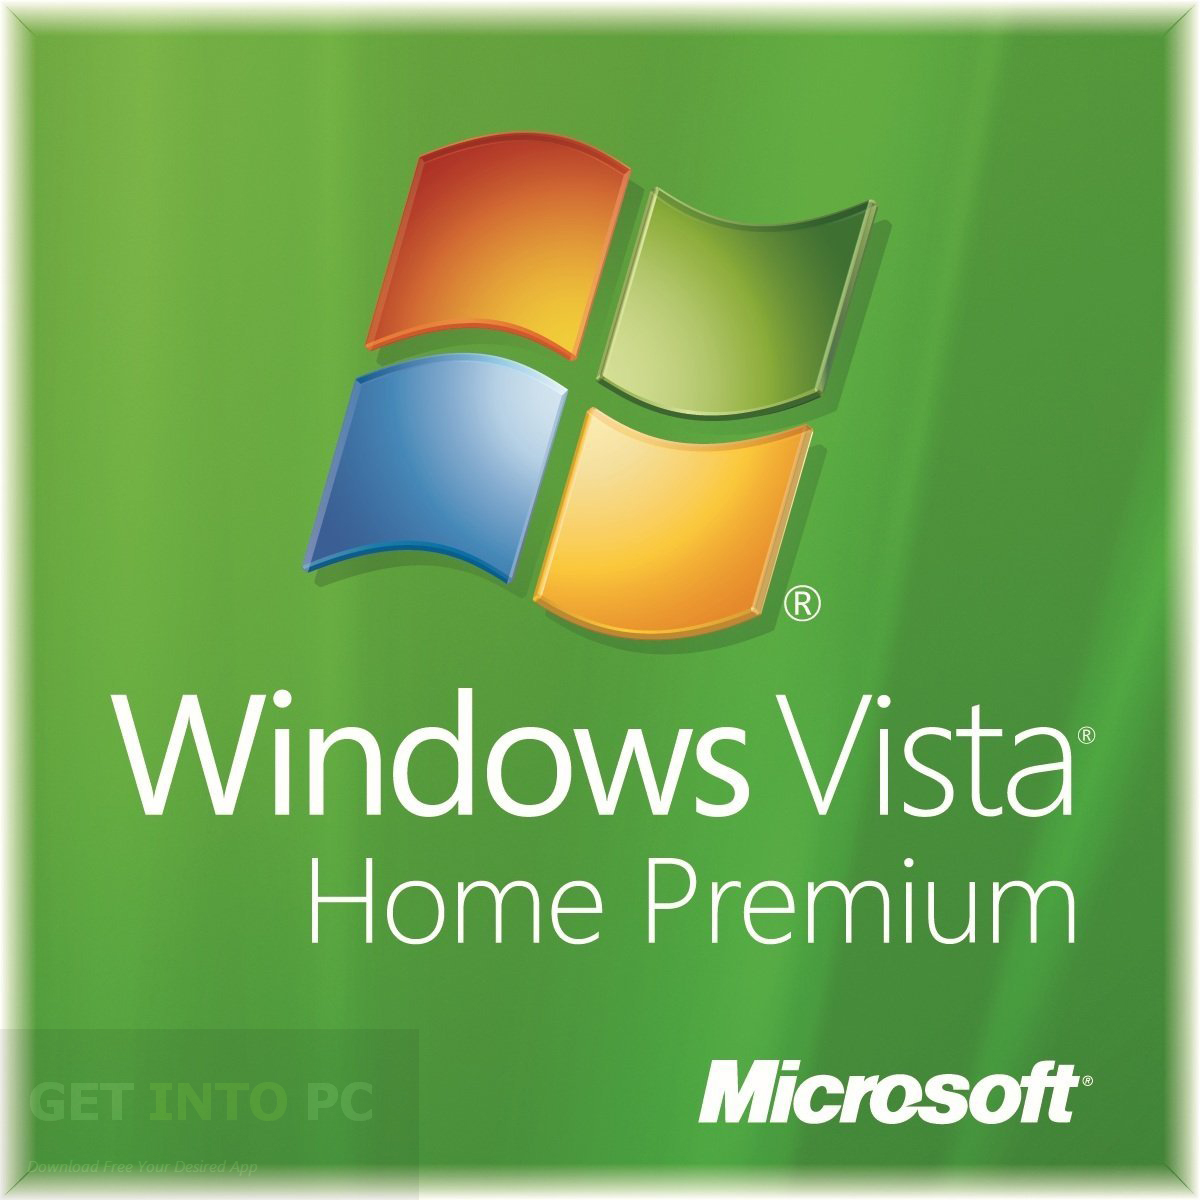 Windows Vista Home Premium Free Download ISO 32 Bit 64 Bit